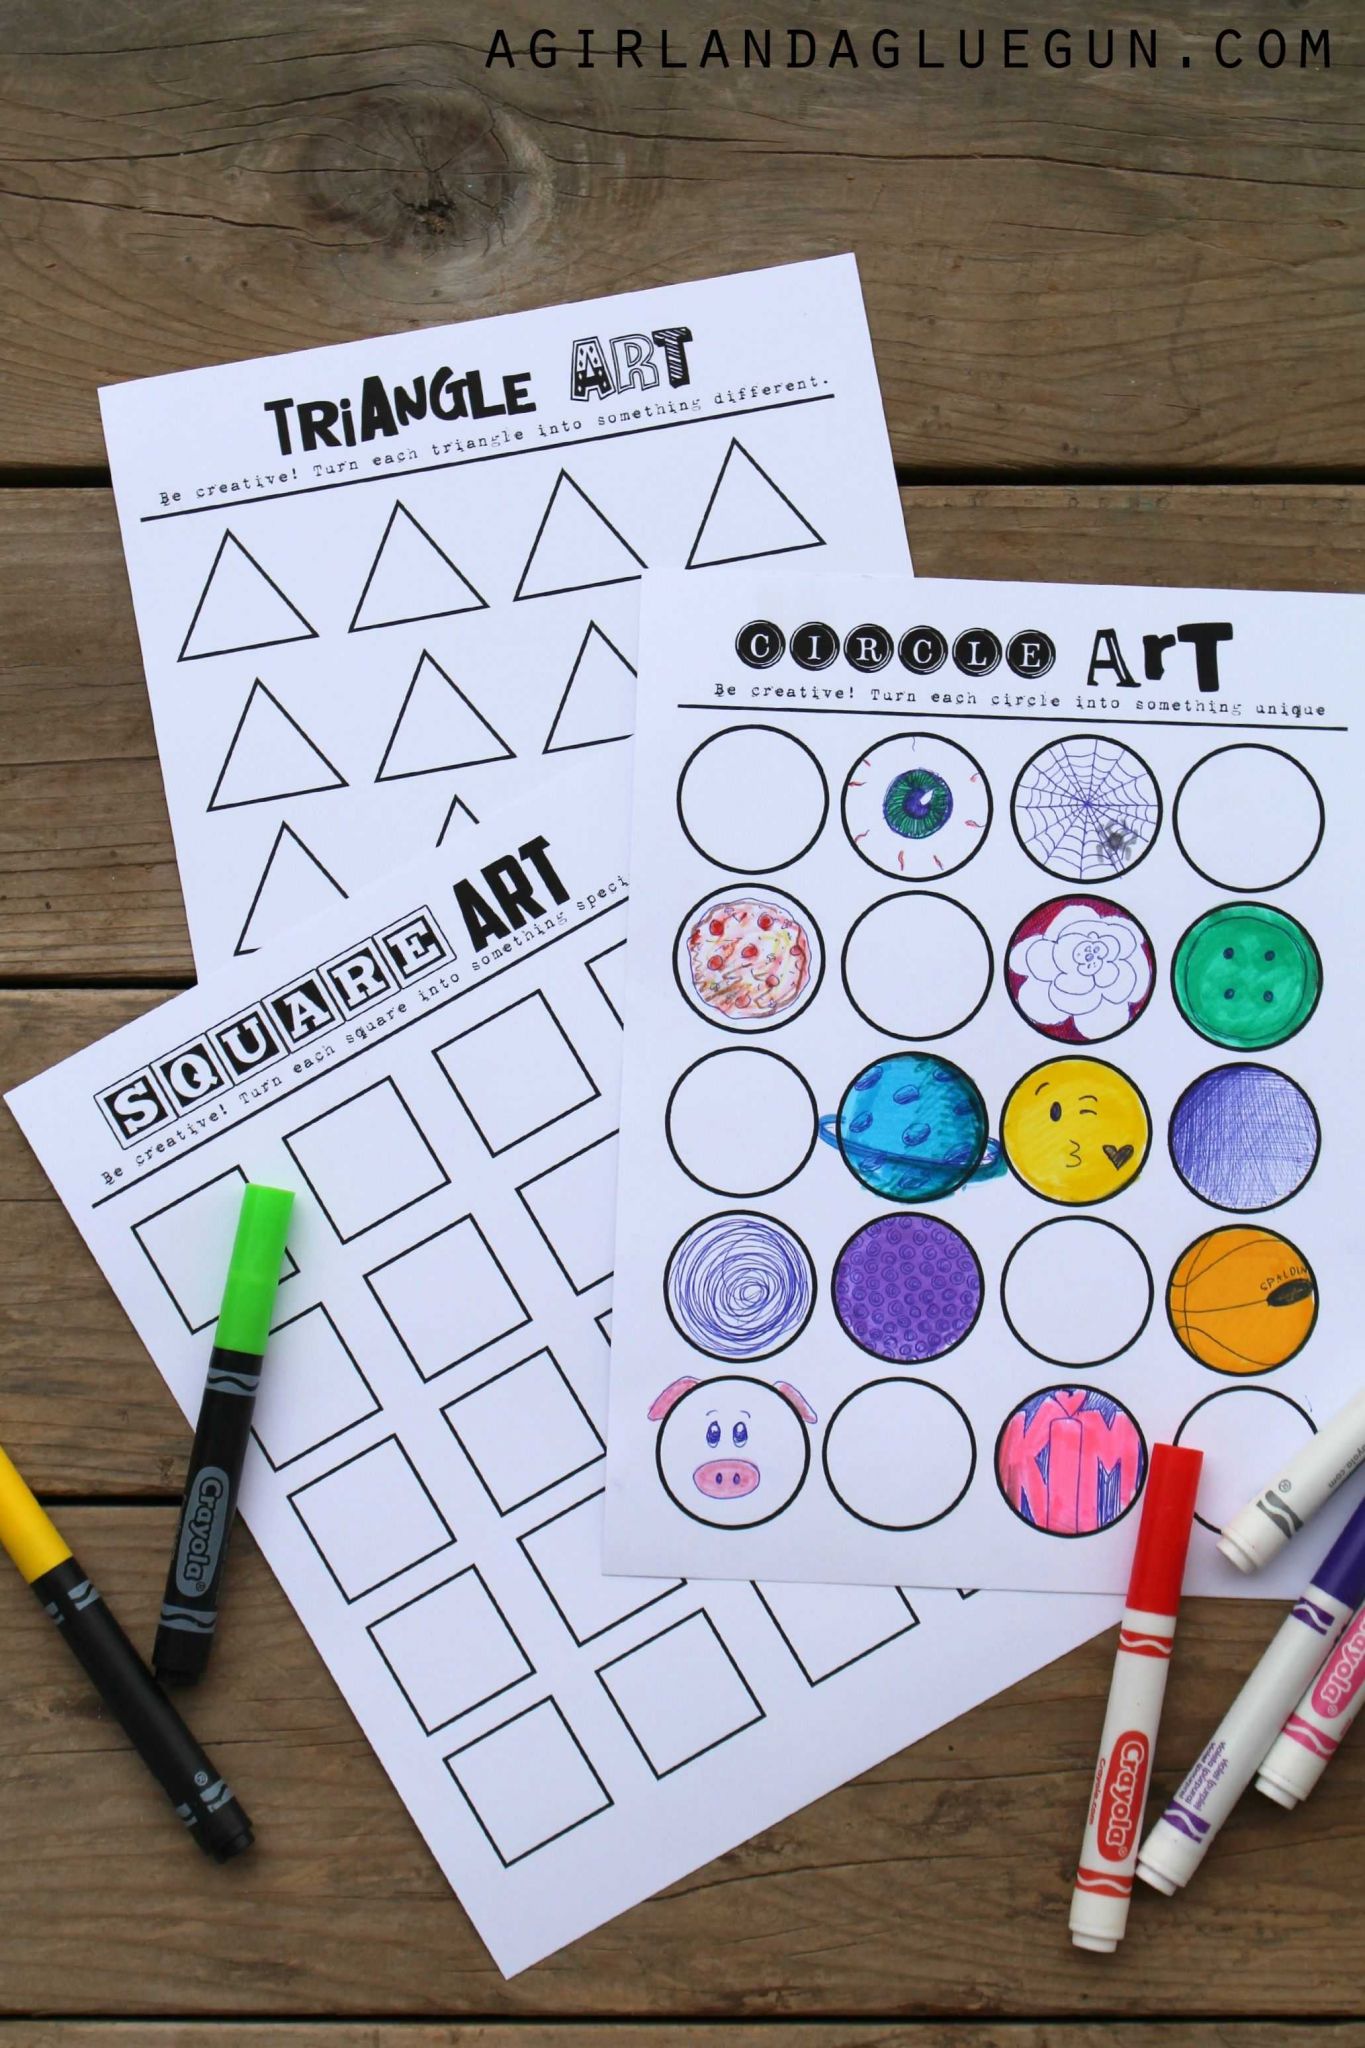 Reproducible Student Worksheet or Geometric Art Printable Let Your Kids Imaginations Run Wild